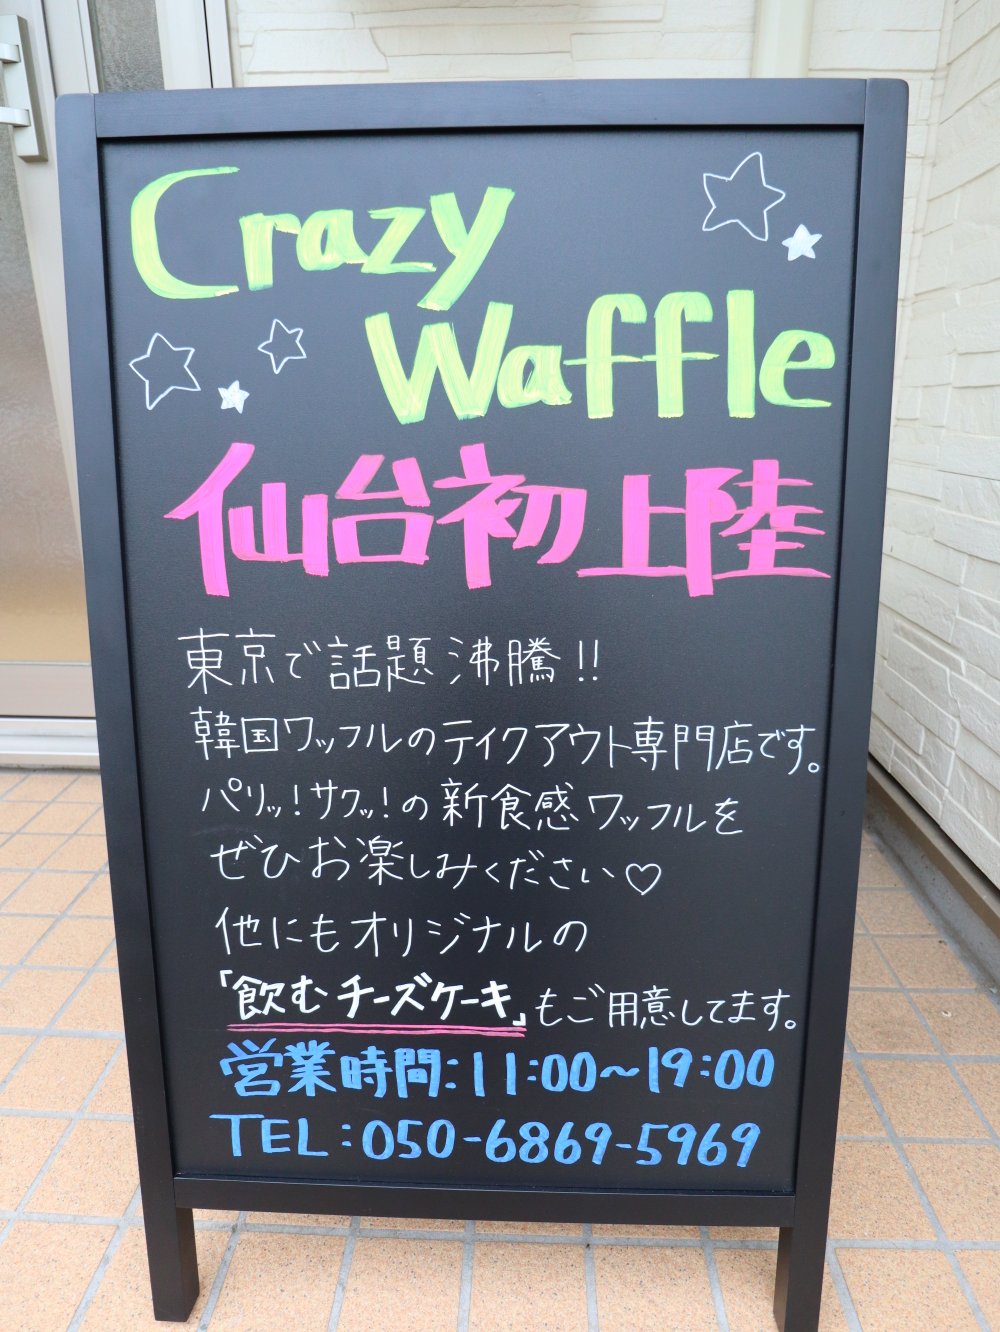 Crazy Waffle 仙台店について